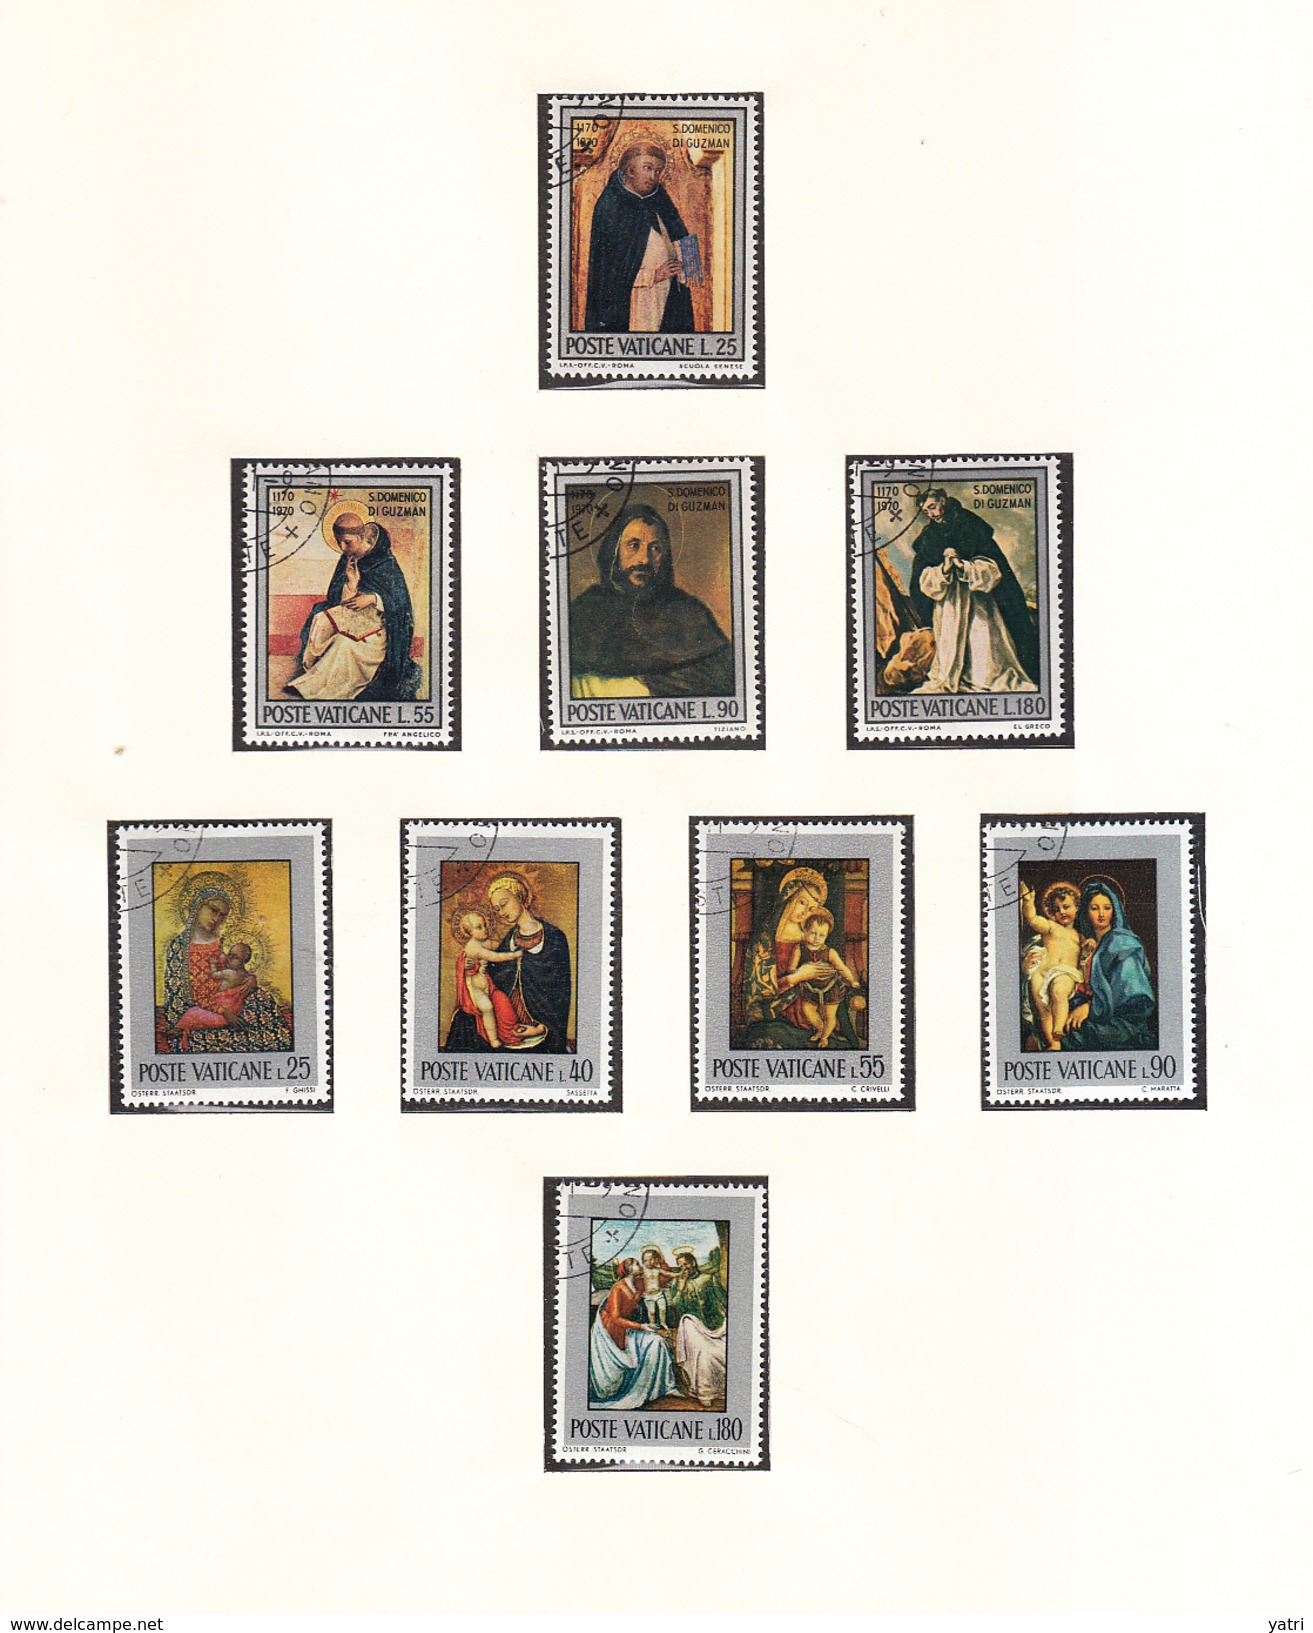 Vaticano - 1971 - Annata Completa | Complete Year Set (annullati) - Full Years